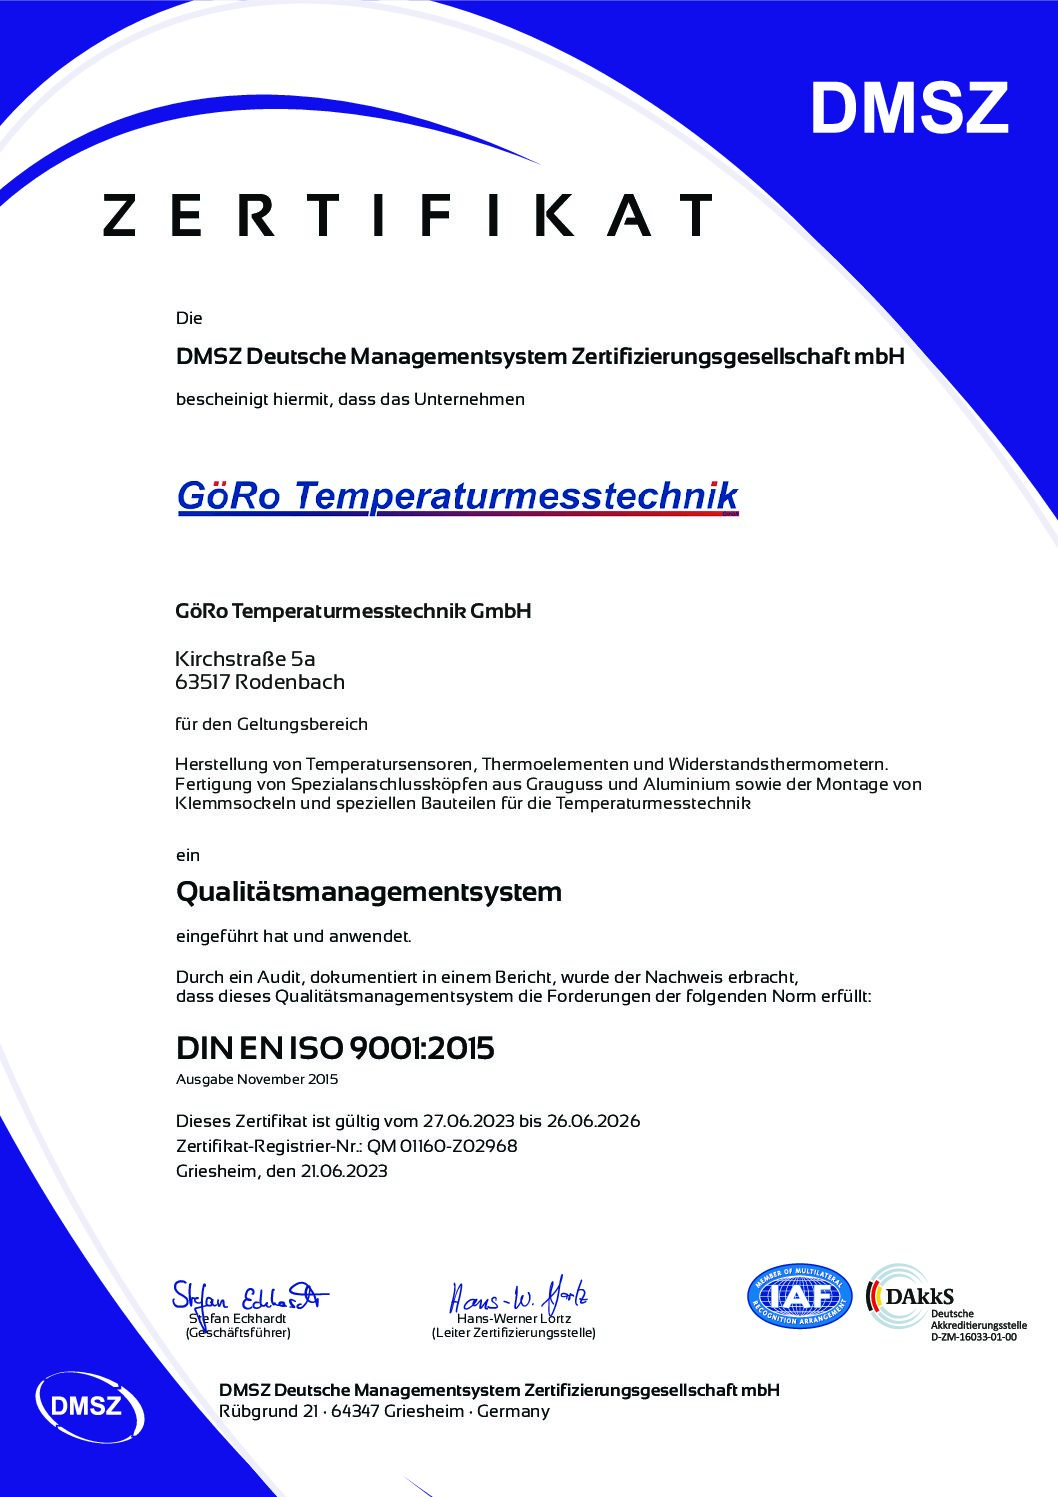 GöRo Temperaturmesstechnik GmbH nach DIN EN ISO 9001:2015 zertifiziert